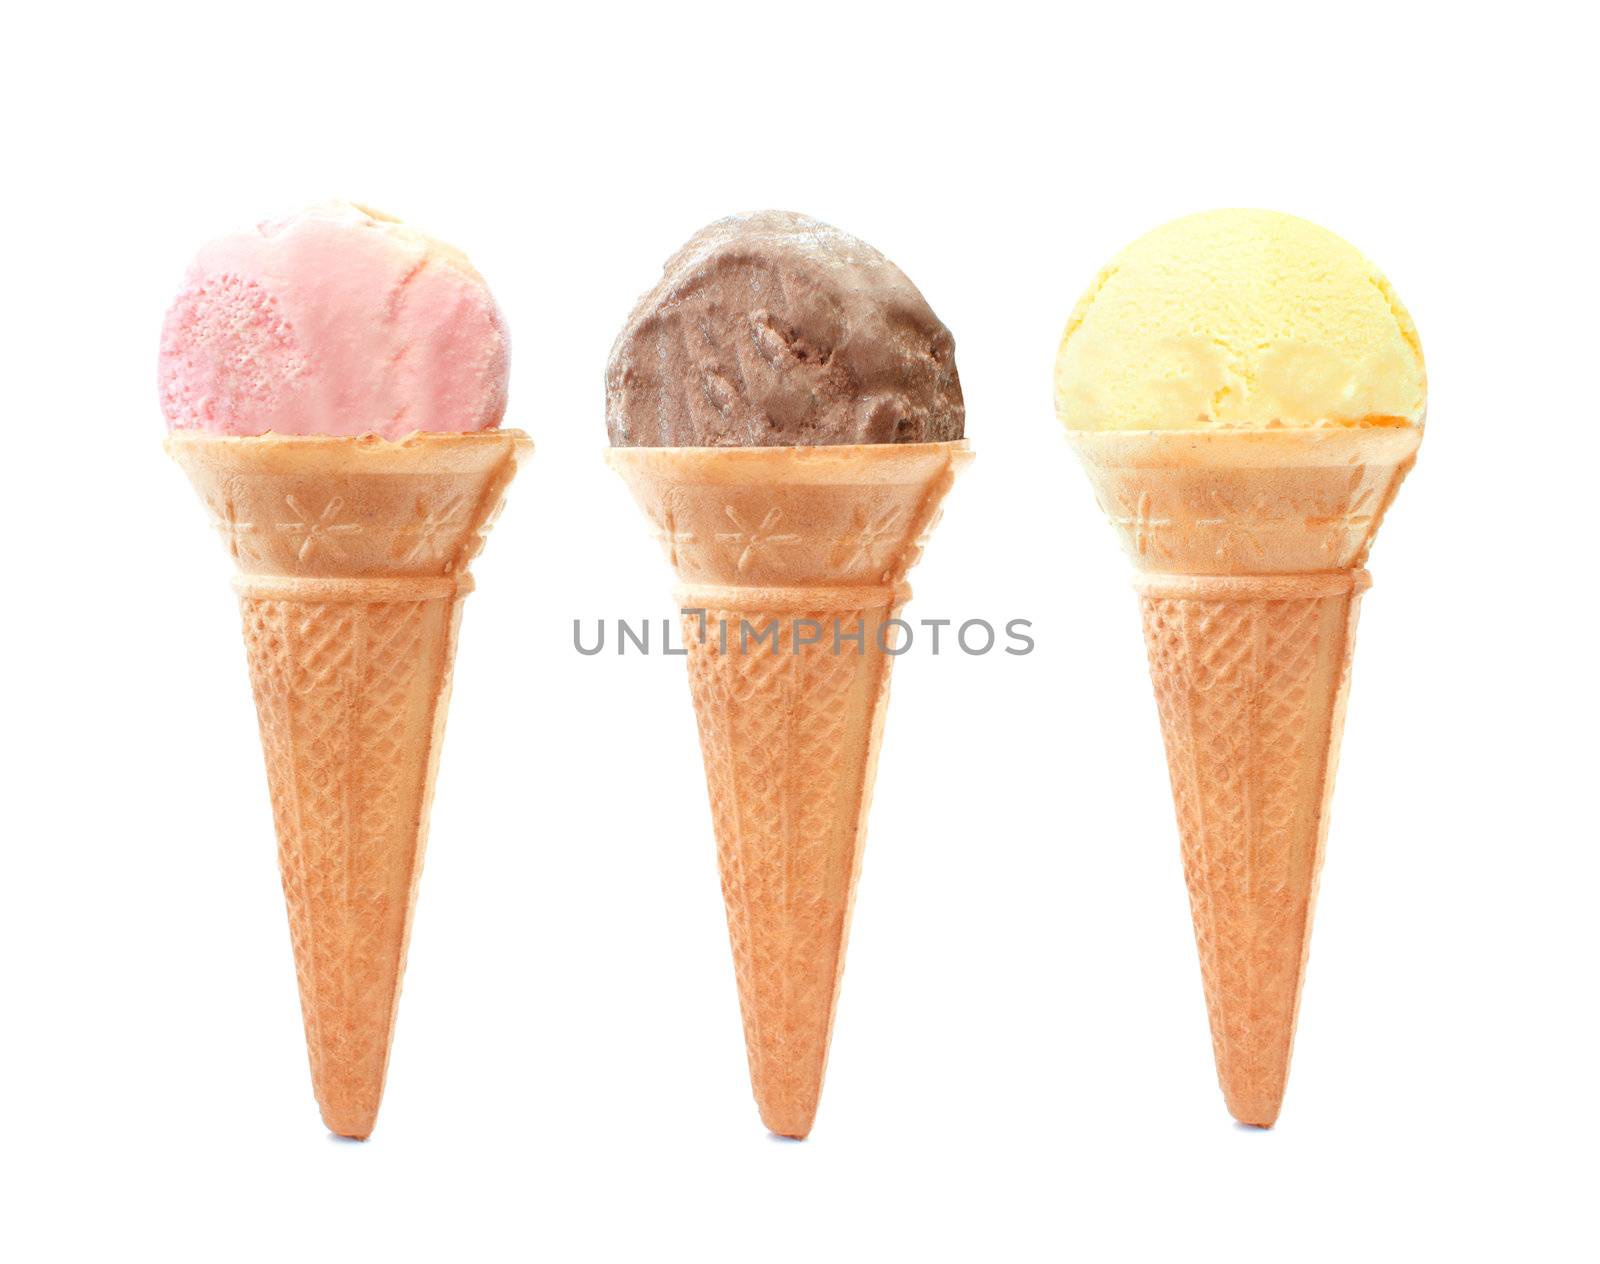 Icecream cones by unikpix